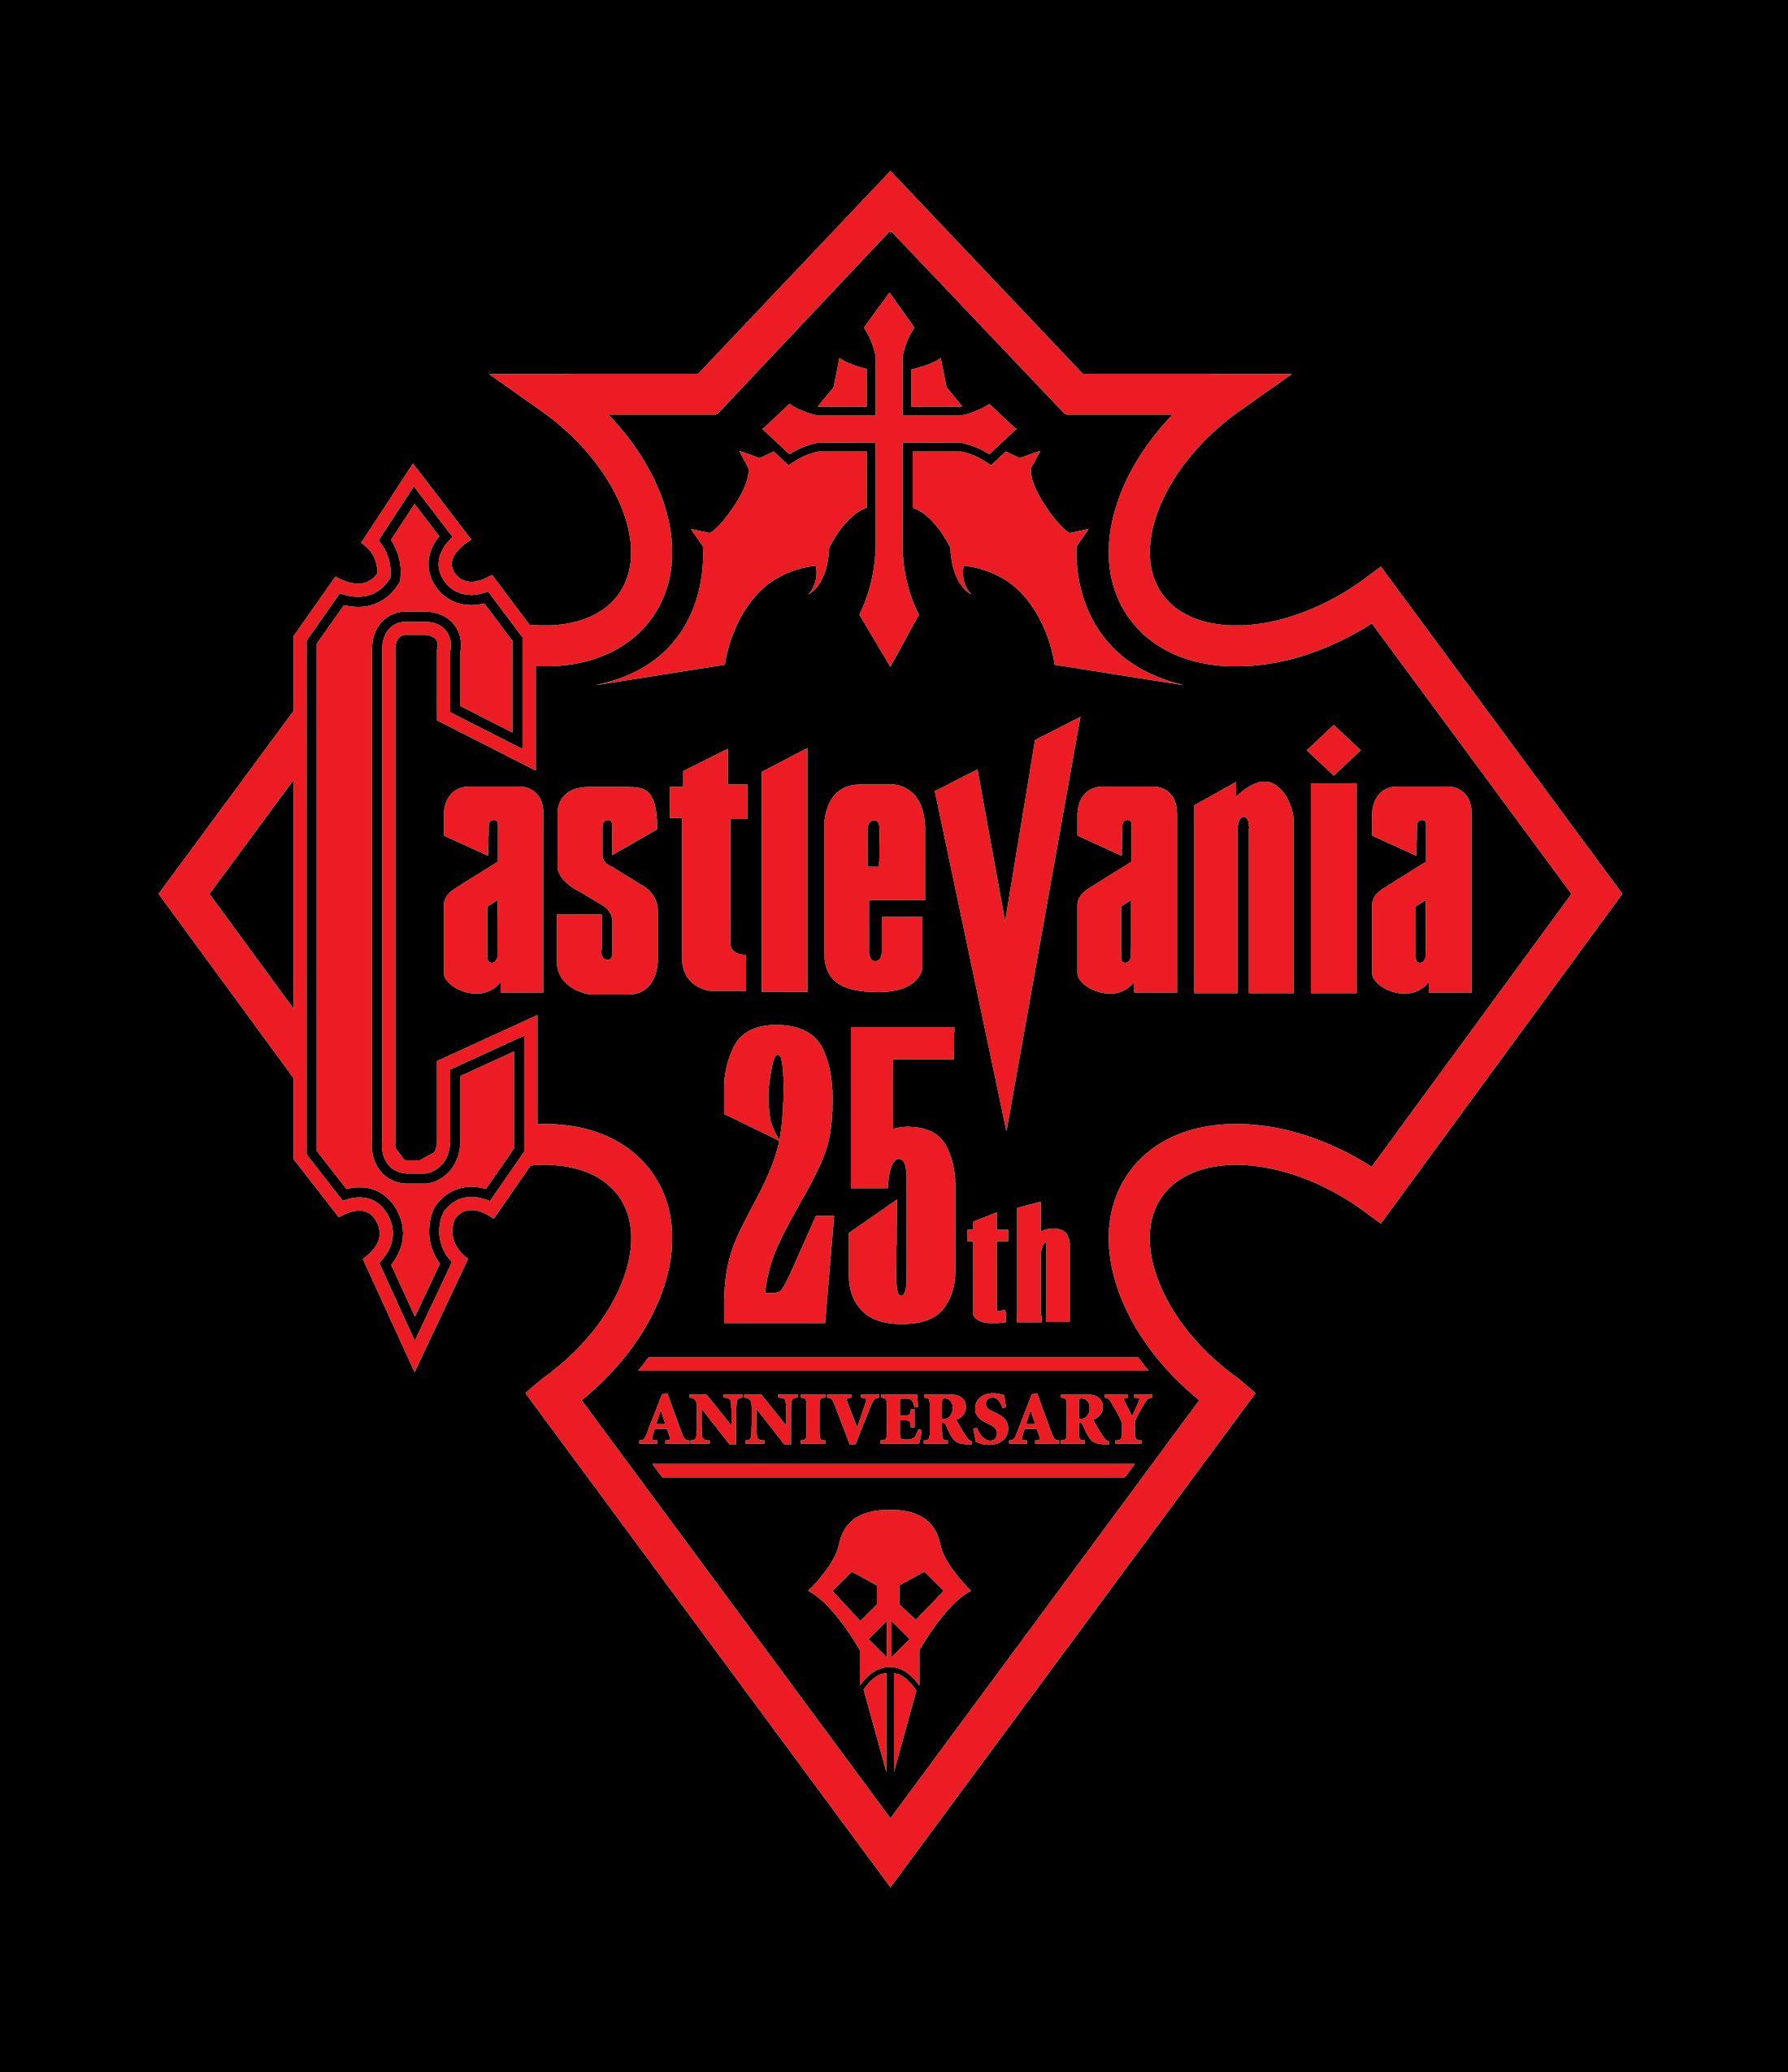 Castlevania Logo - The Castlevania Series' 25th Anniversary